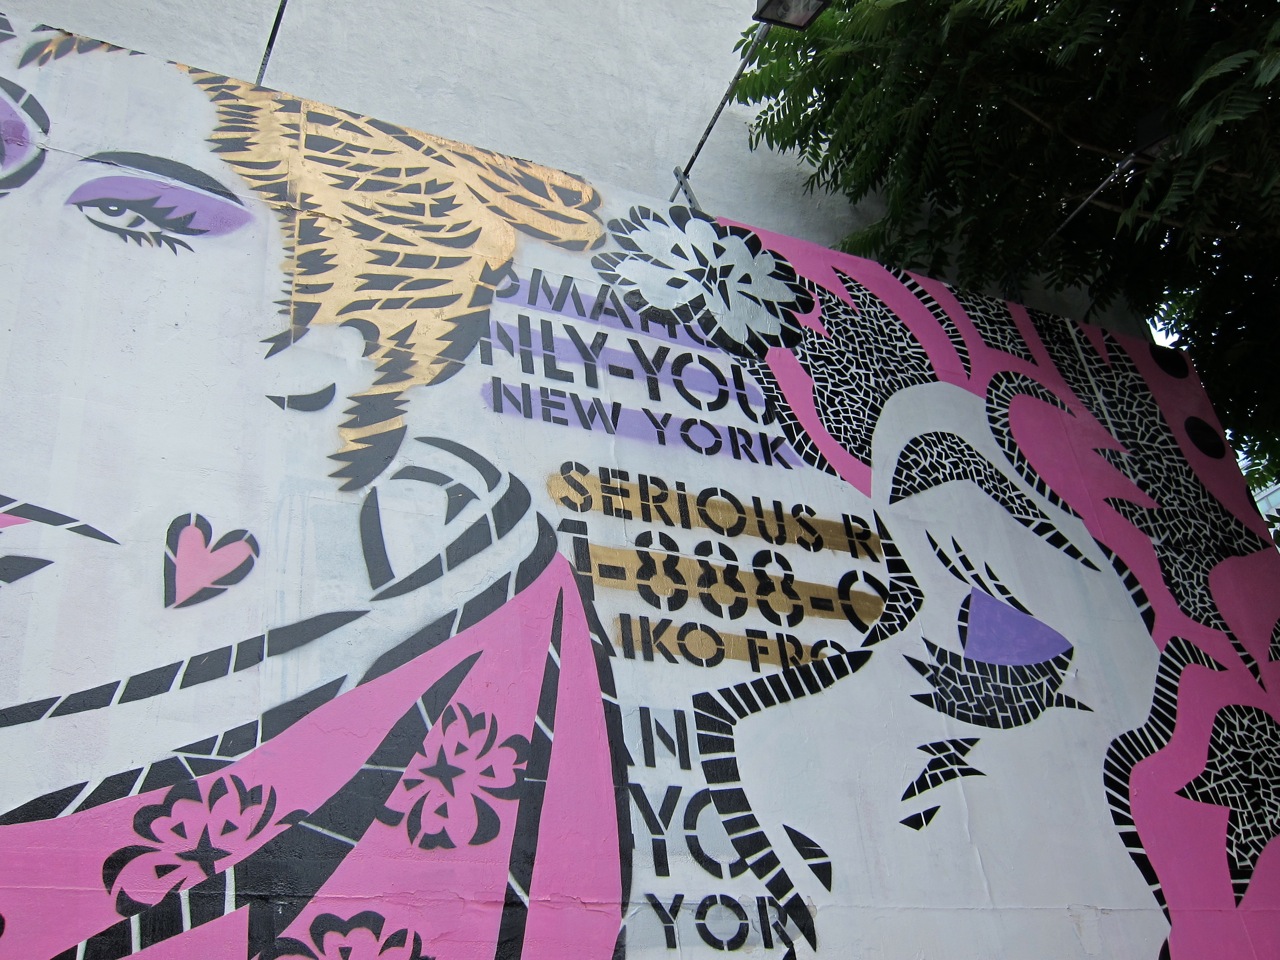 Aiko Bowery Houston Mural fin AM 01